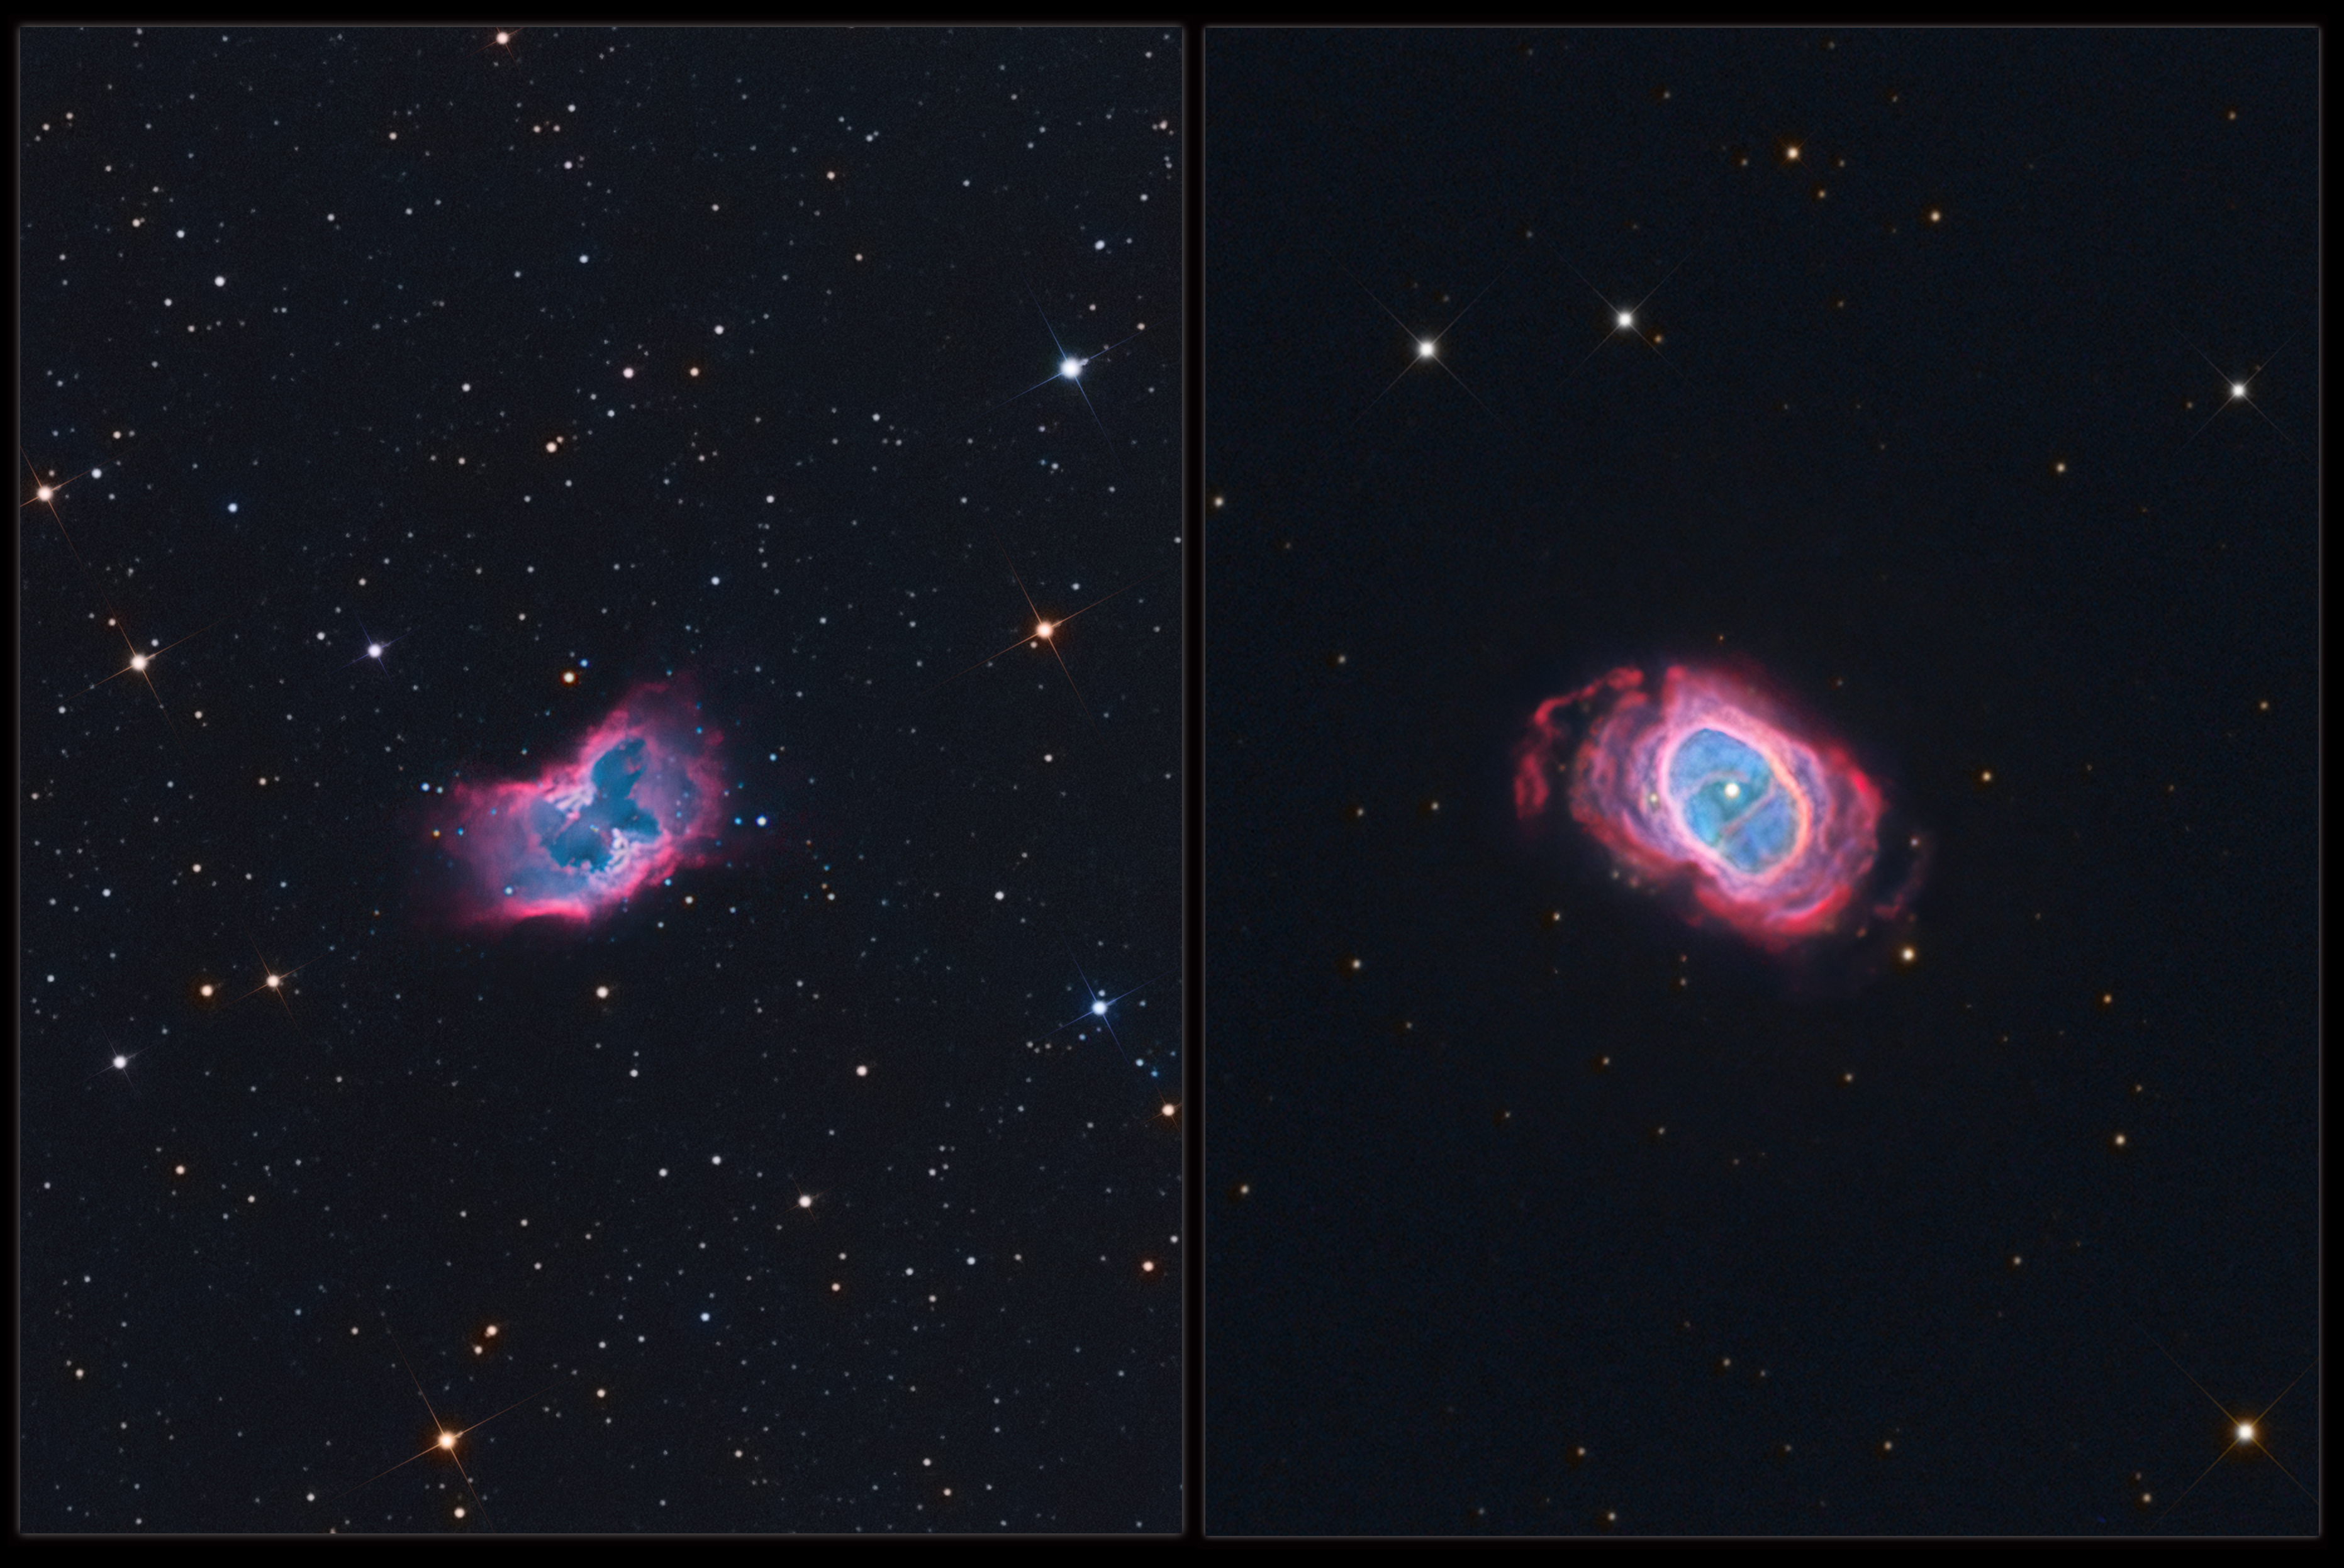 Planetary_nebula comparison